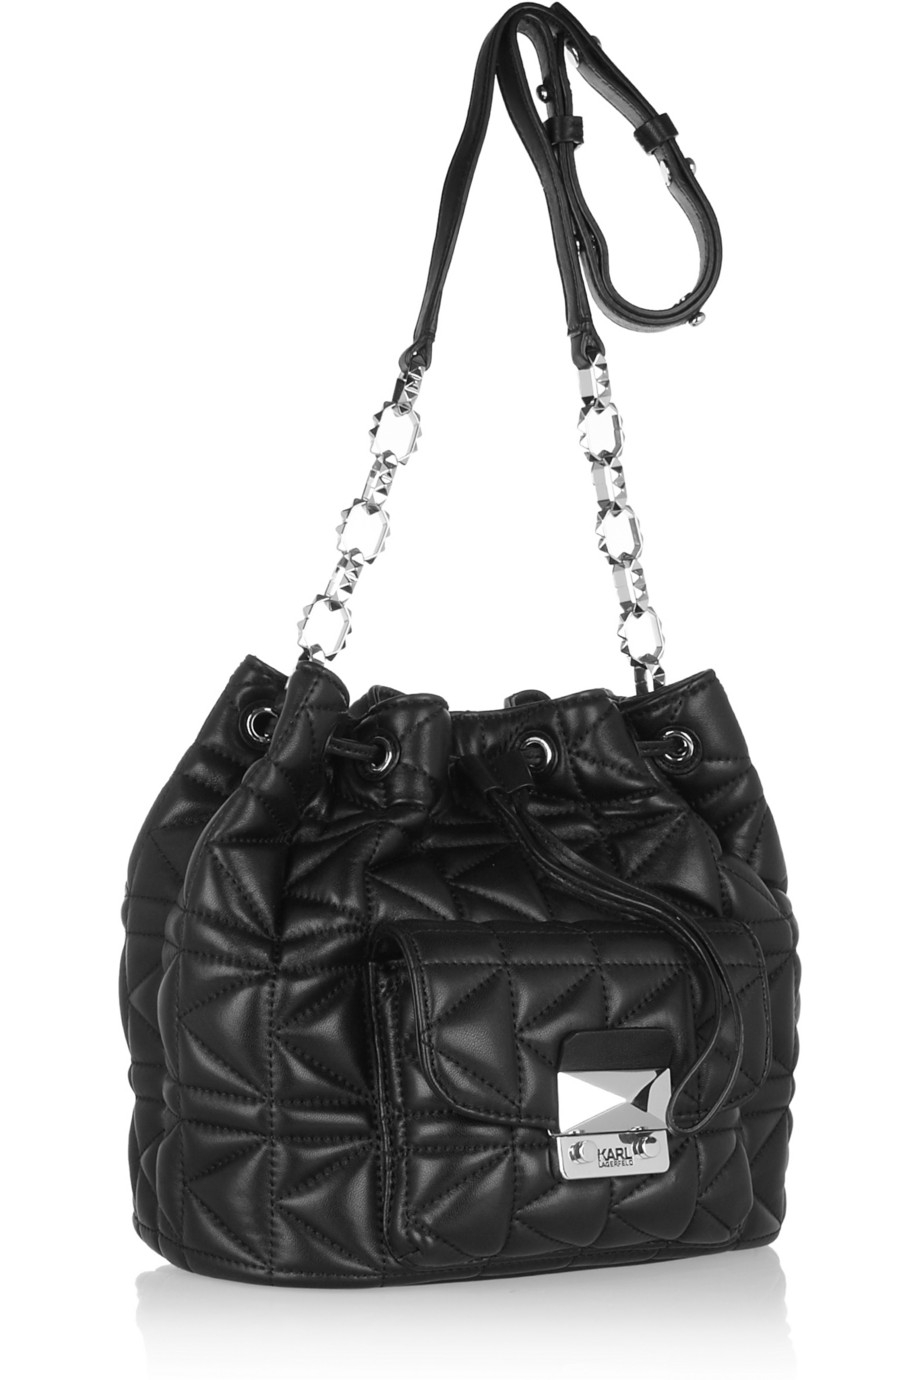 Lyst - Karl Lagerfeld K/Kuilted Leather Bucket Bag in Black